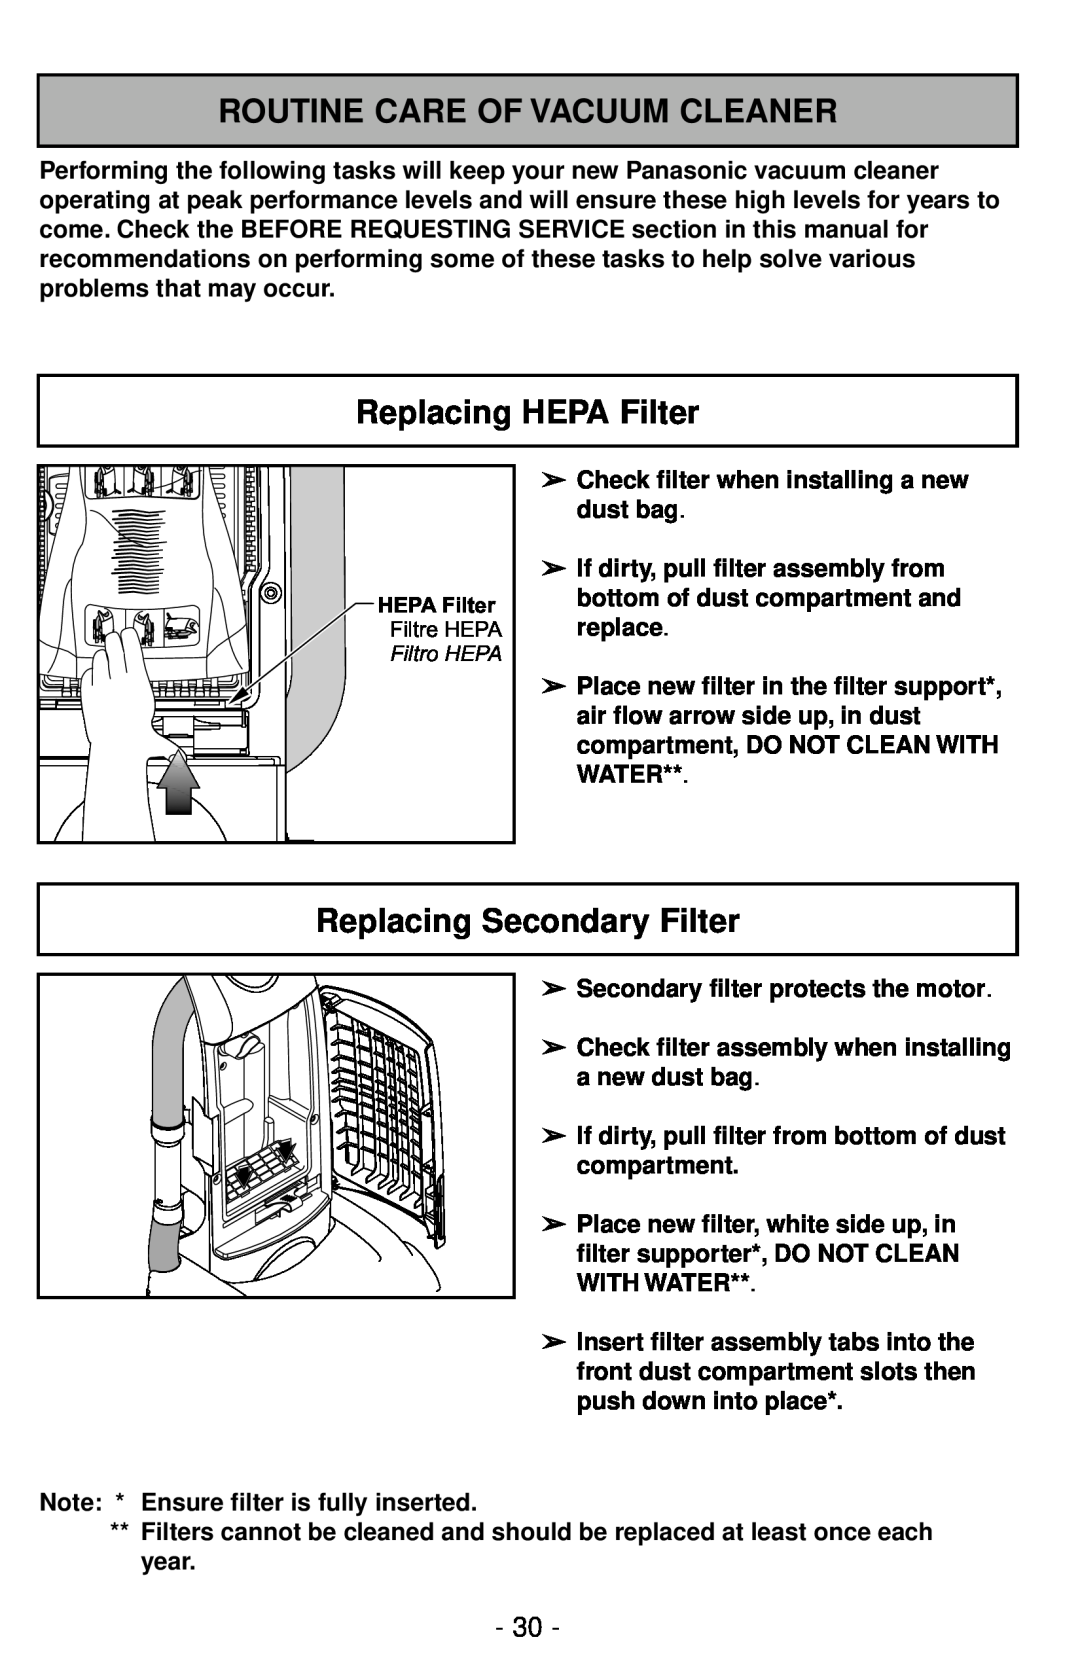 Panasonic MC-UG787 manuel dutilisation Routine Care Of Vacuum Cleaner, Replacing HEPA Filter, Replacing Secondary Filter 